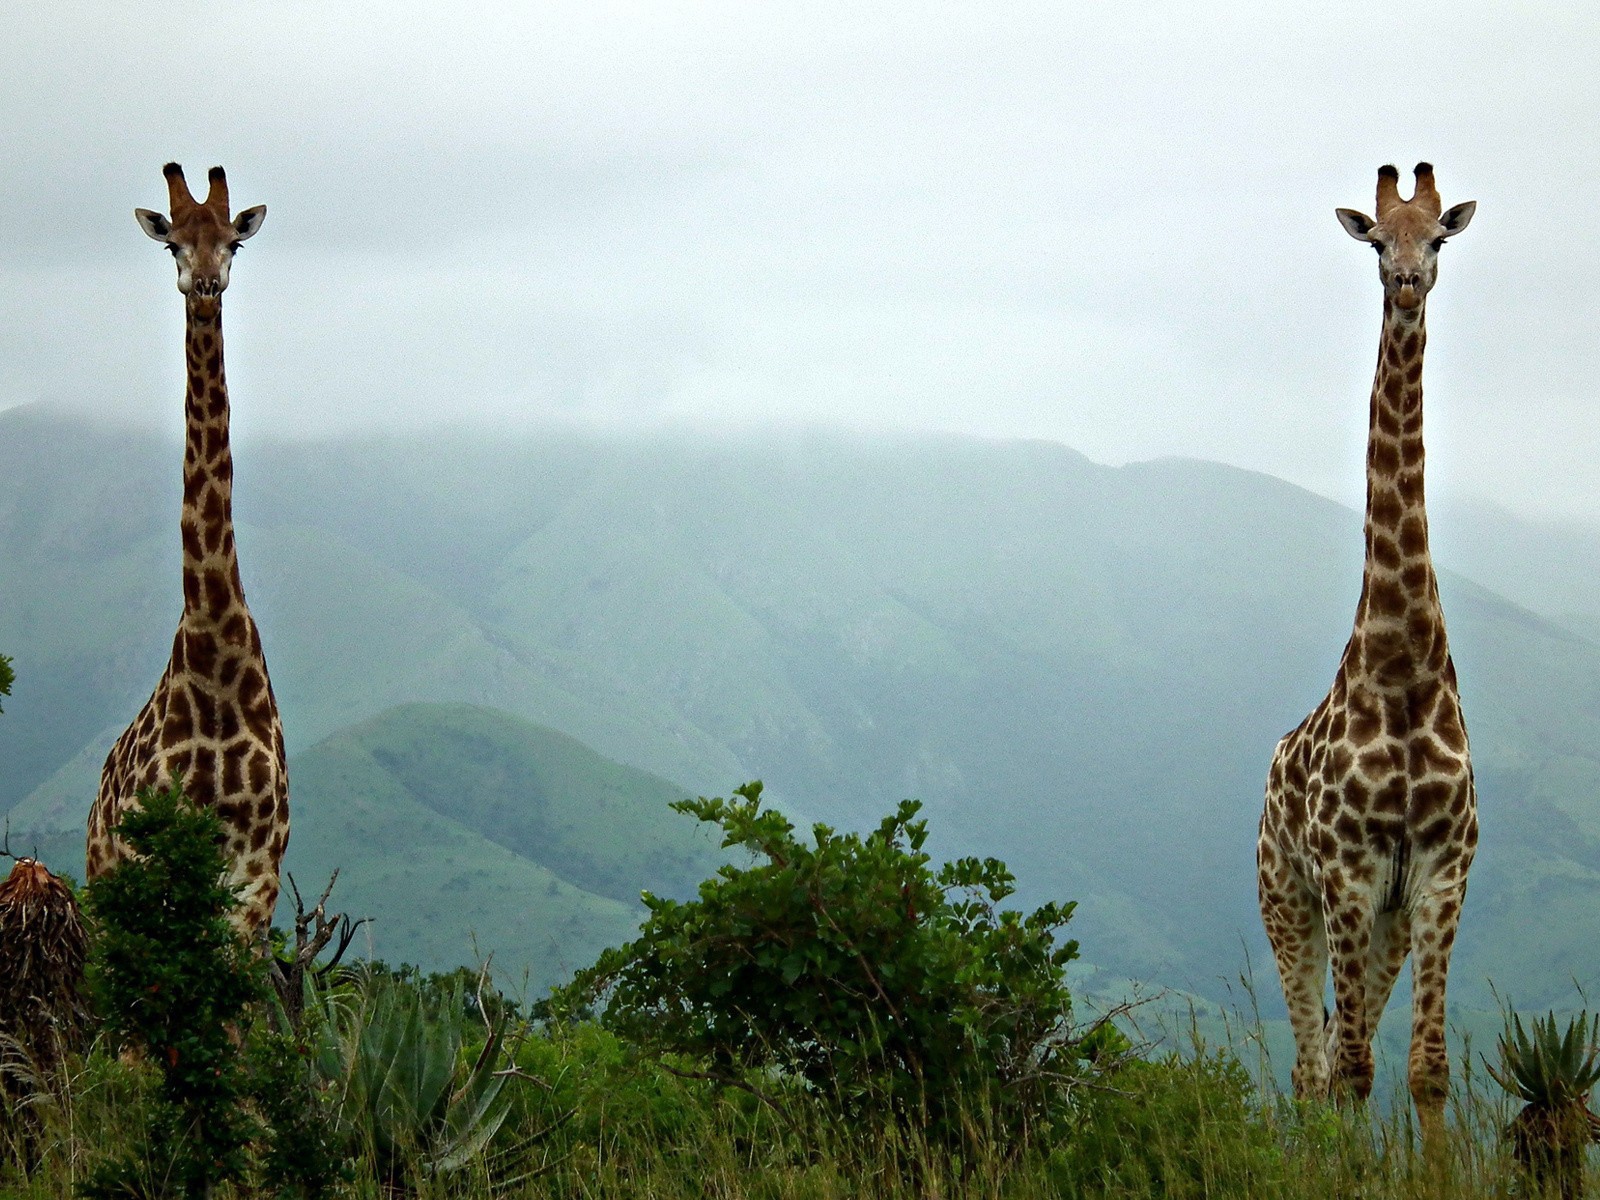 Two giraffe